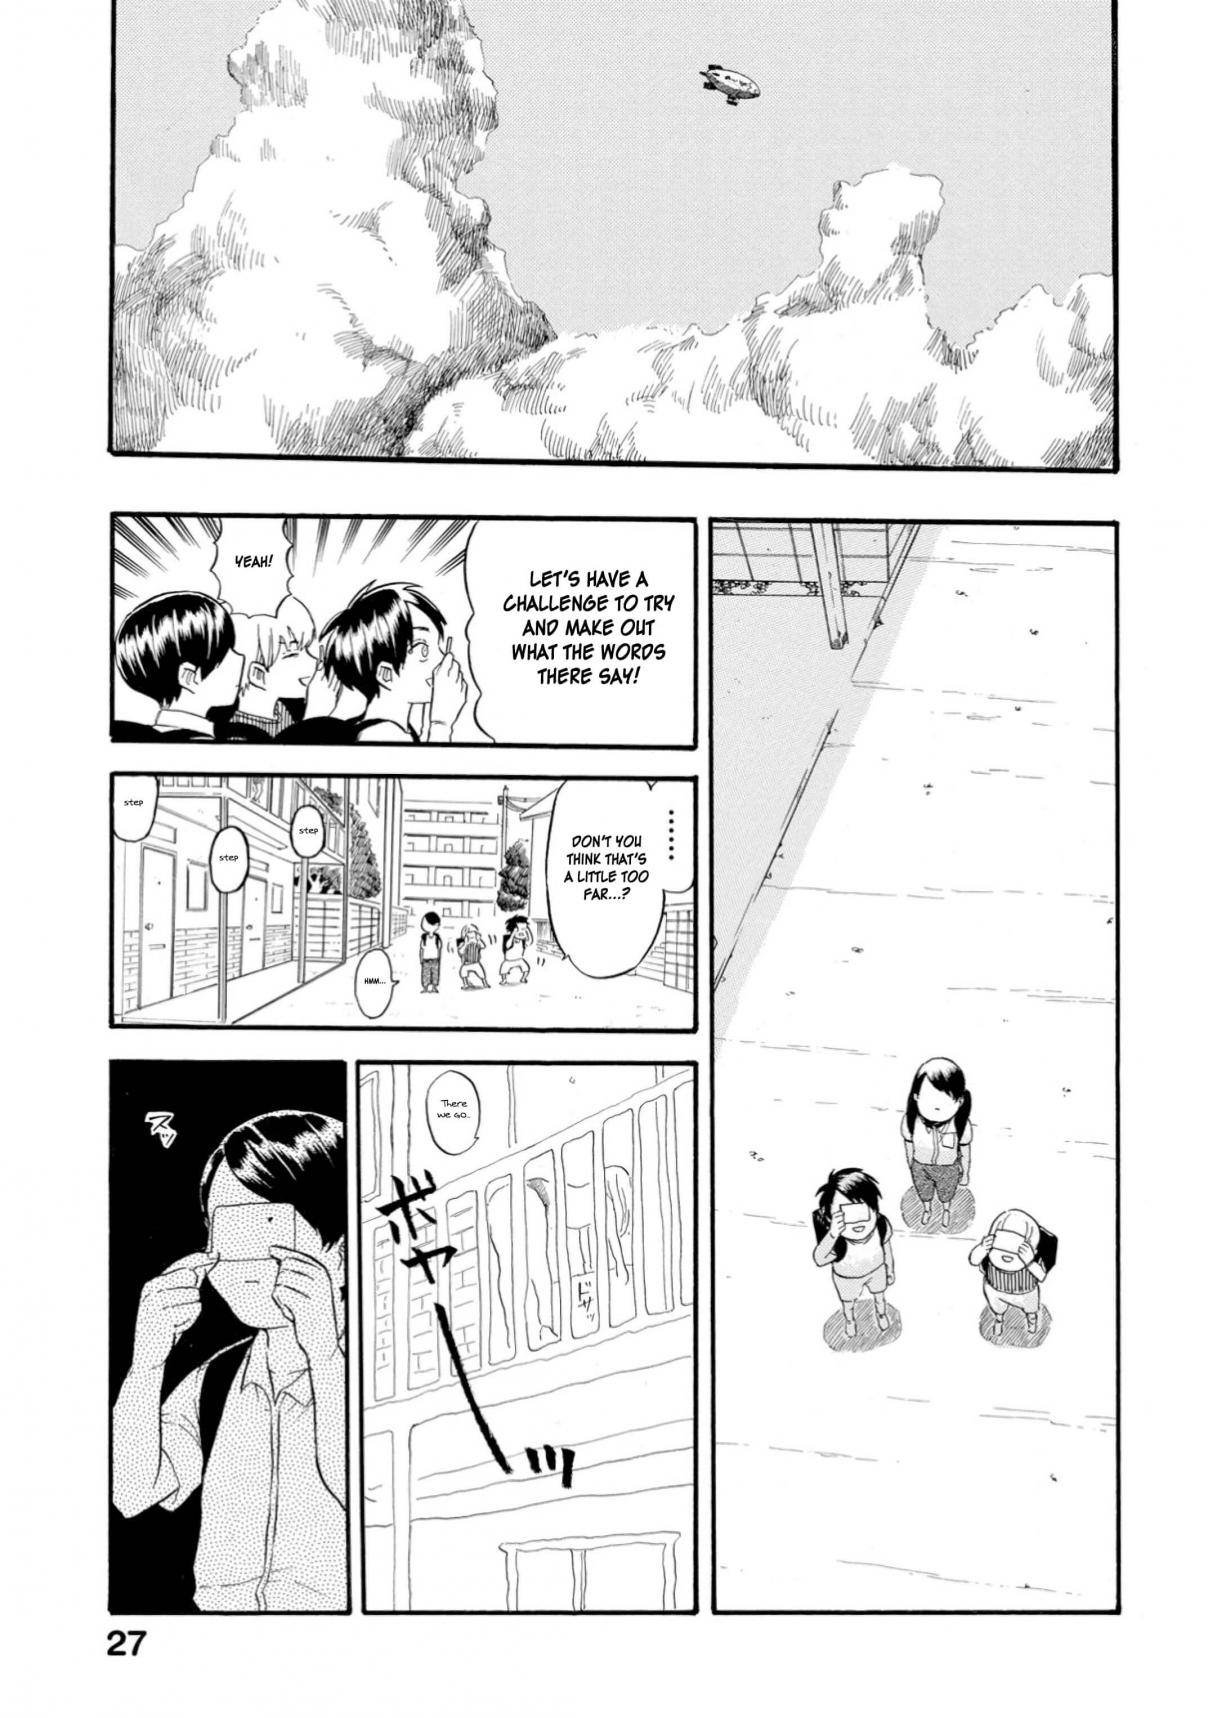 Yokoshima na Eguchi kun Vol. 1 Ch. 5 Looking at the Things You Can't See